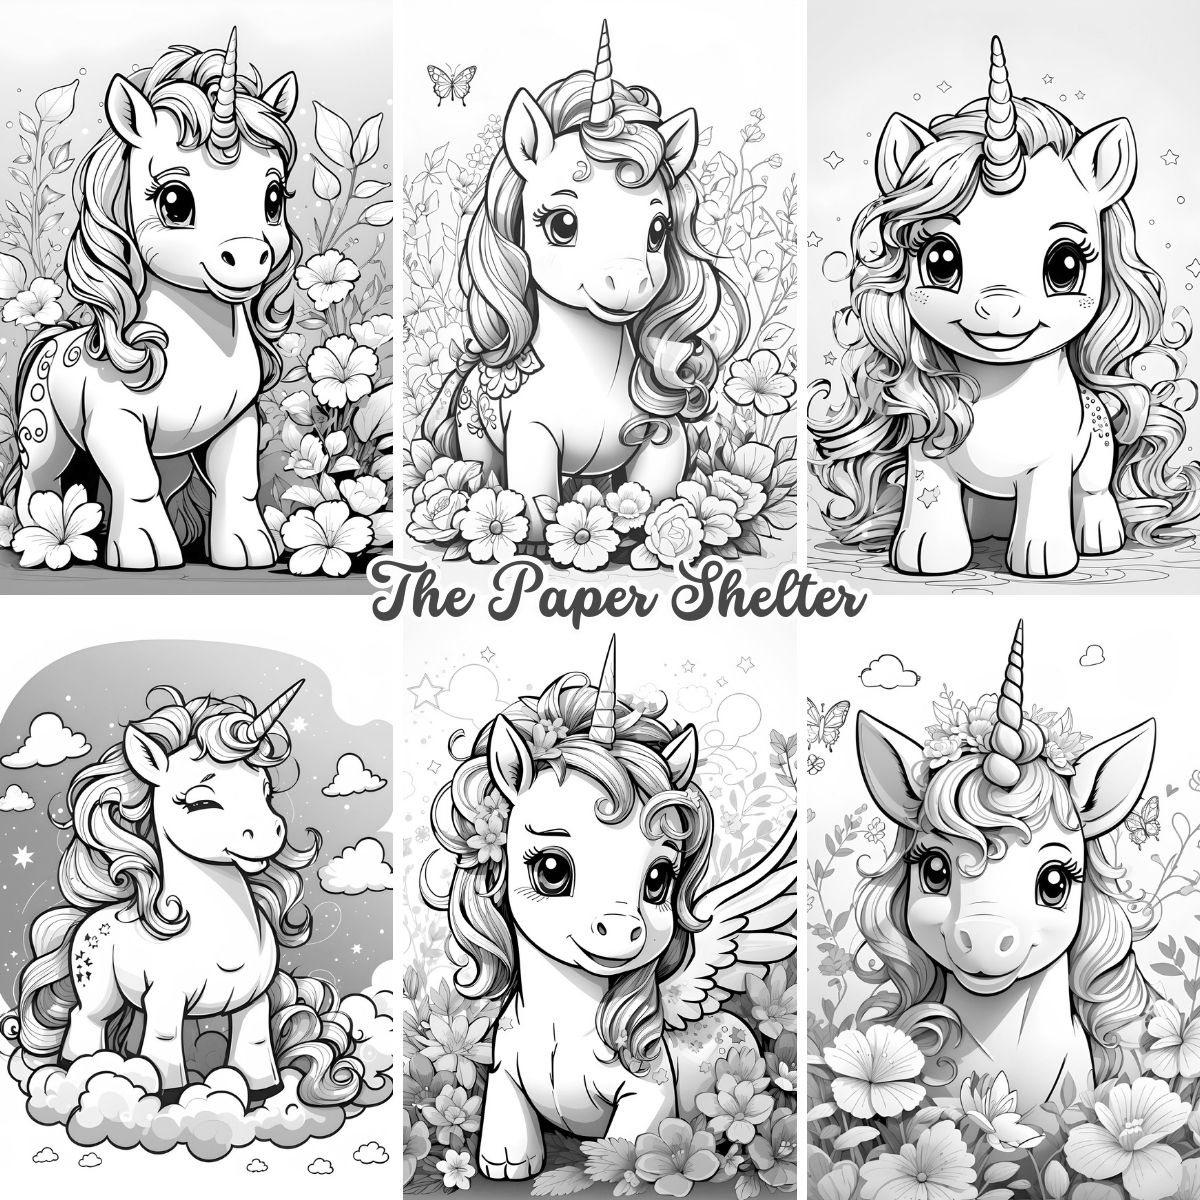 Baby Unicorns - Digital Coloring Book